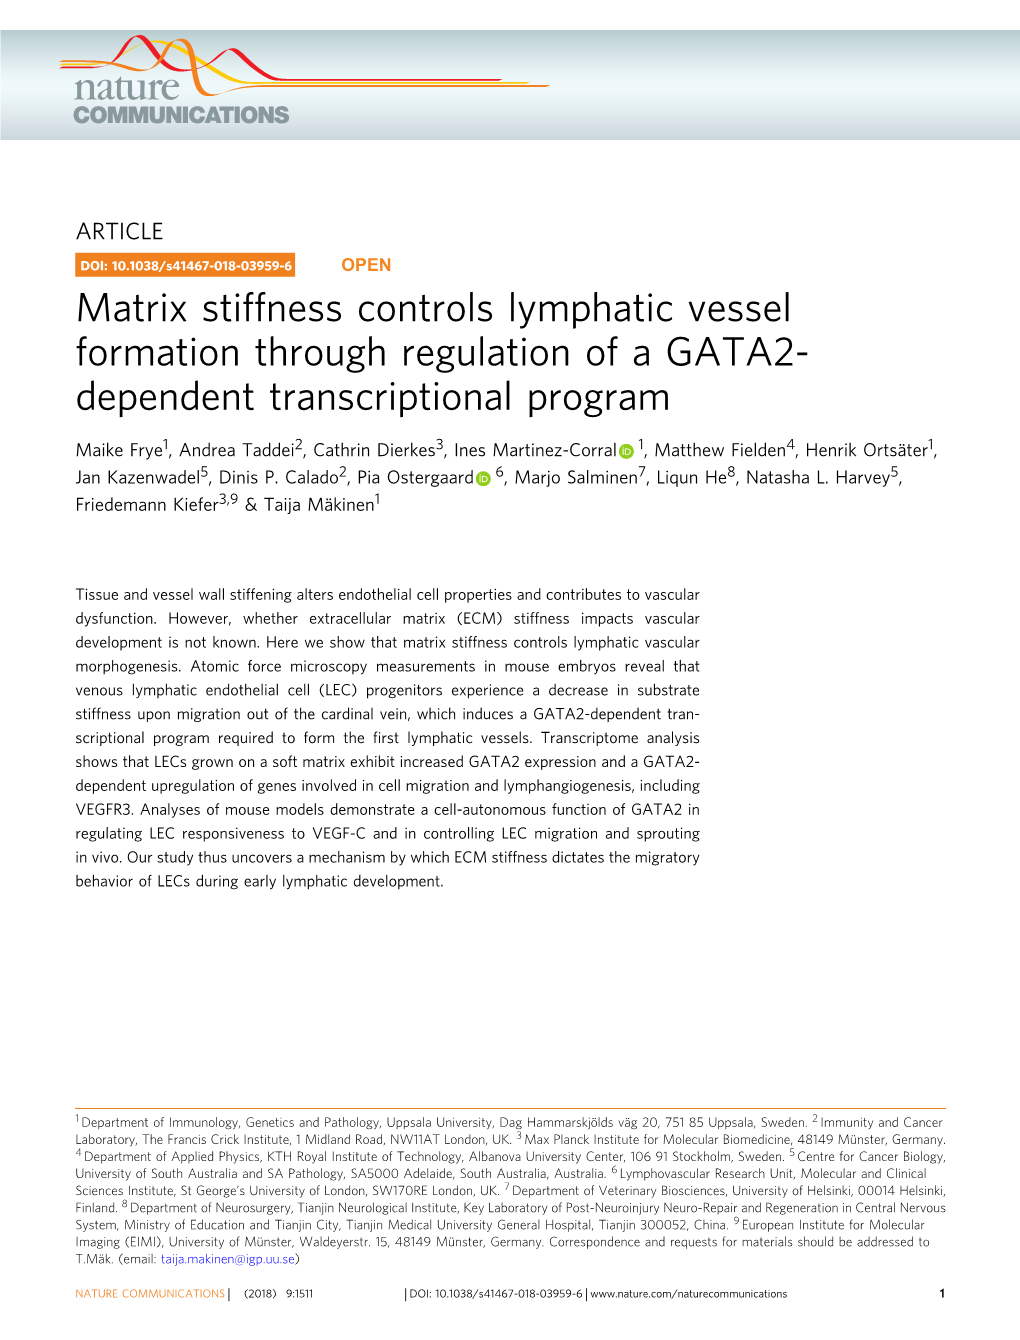 Matrix Stiffness Controls Lymphatic Vessel Formation Through Regulation of a GATA2- Dependent Transcriptional Program